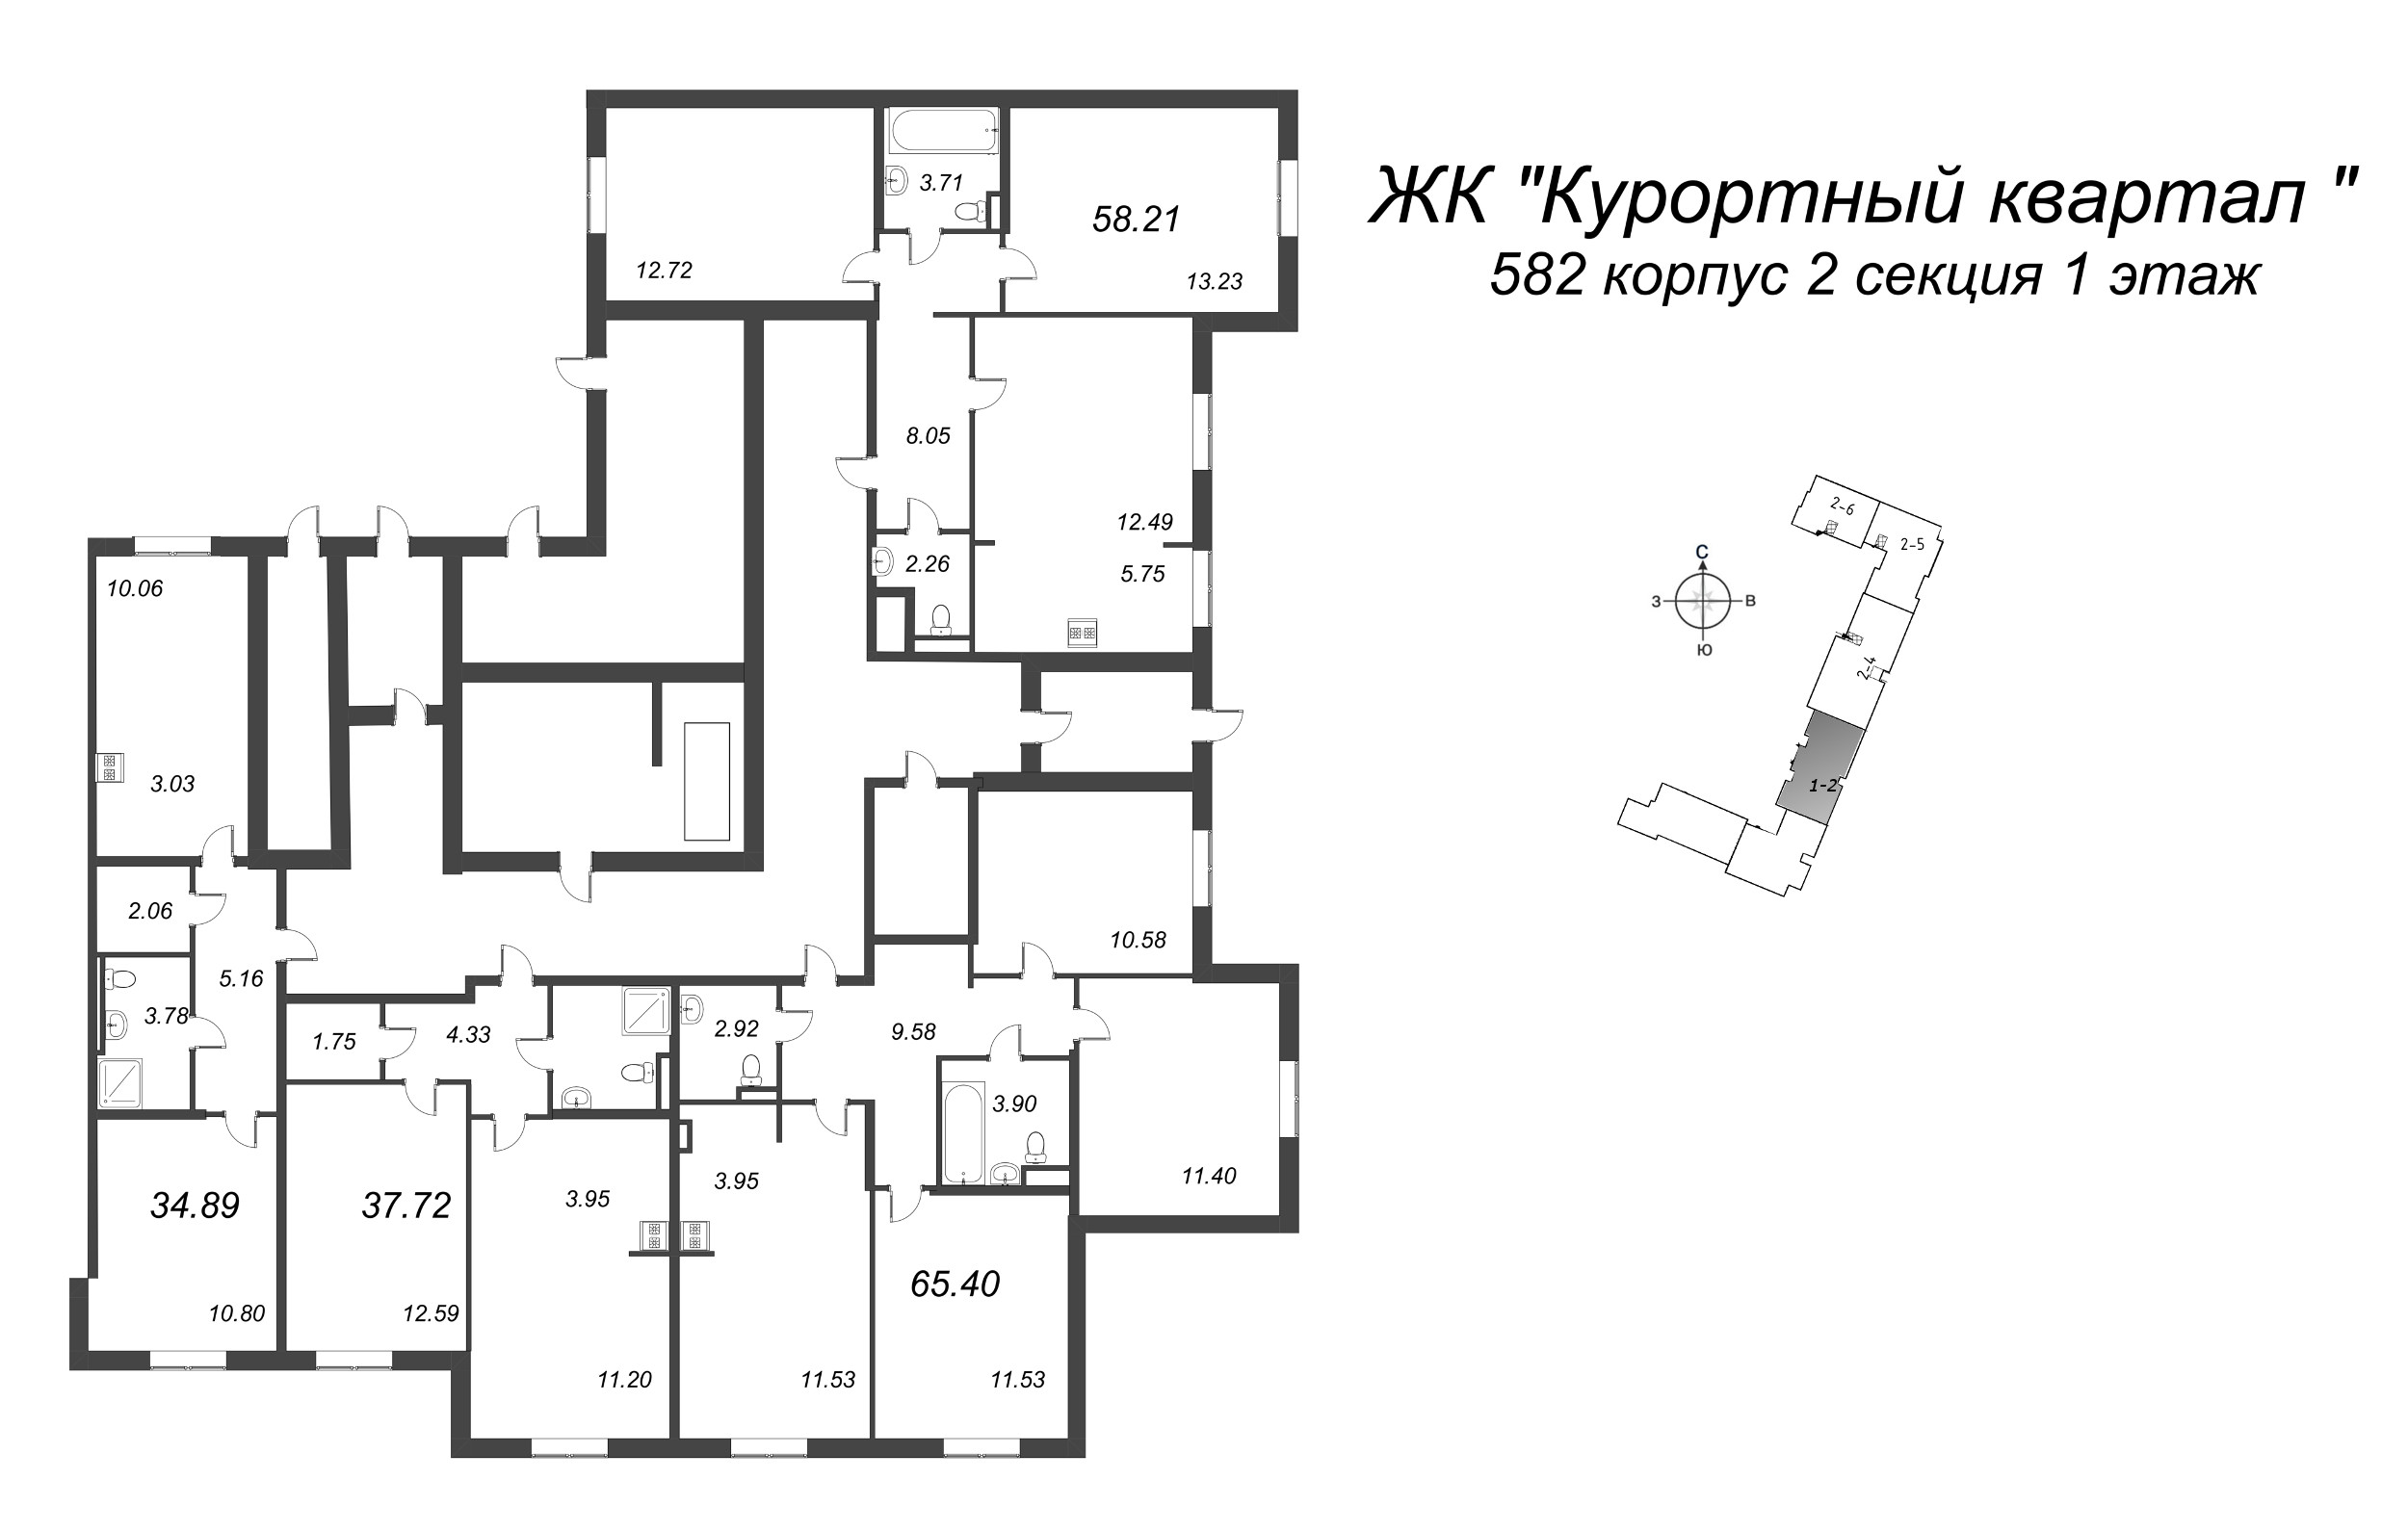 4-комнатная (Евро) квартира, 65.4 м² - планировка этажа